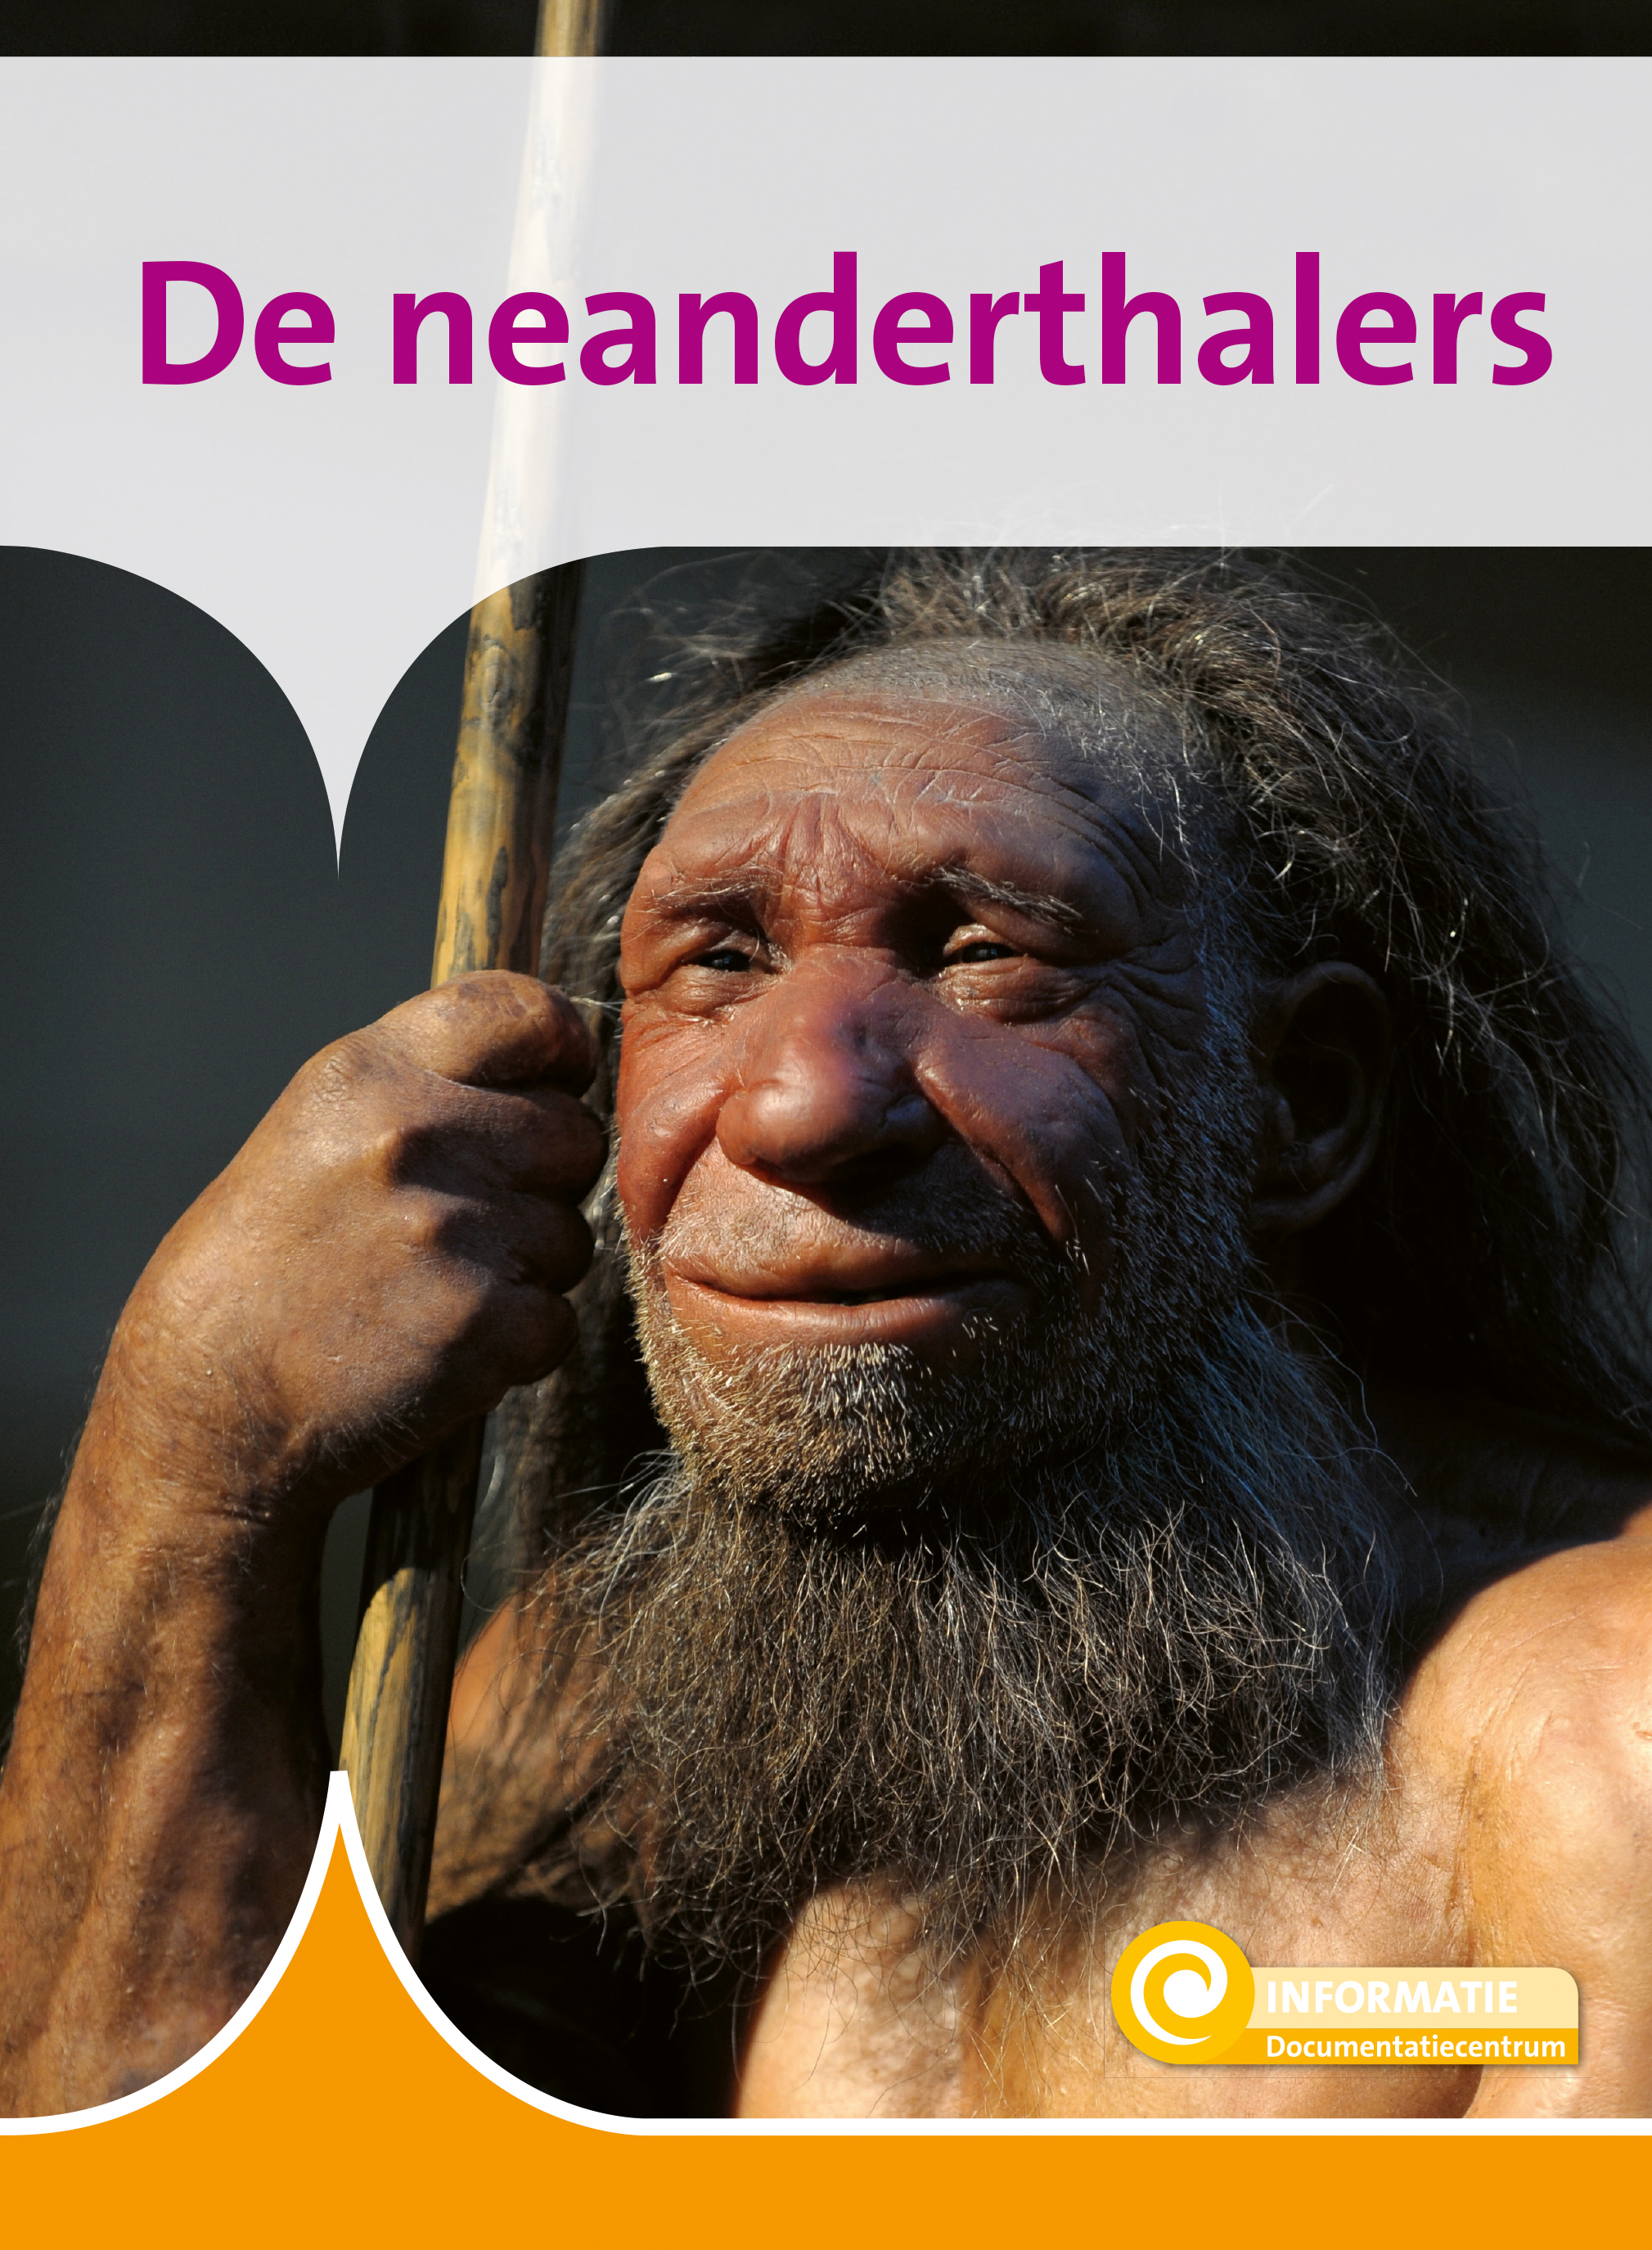 DNBINF158 De neanderthalers